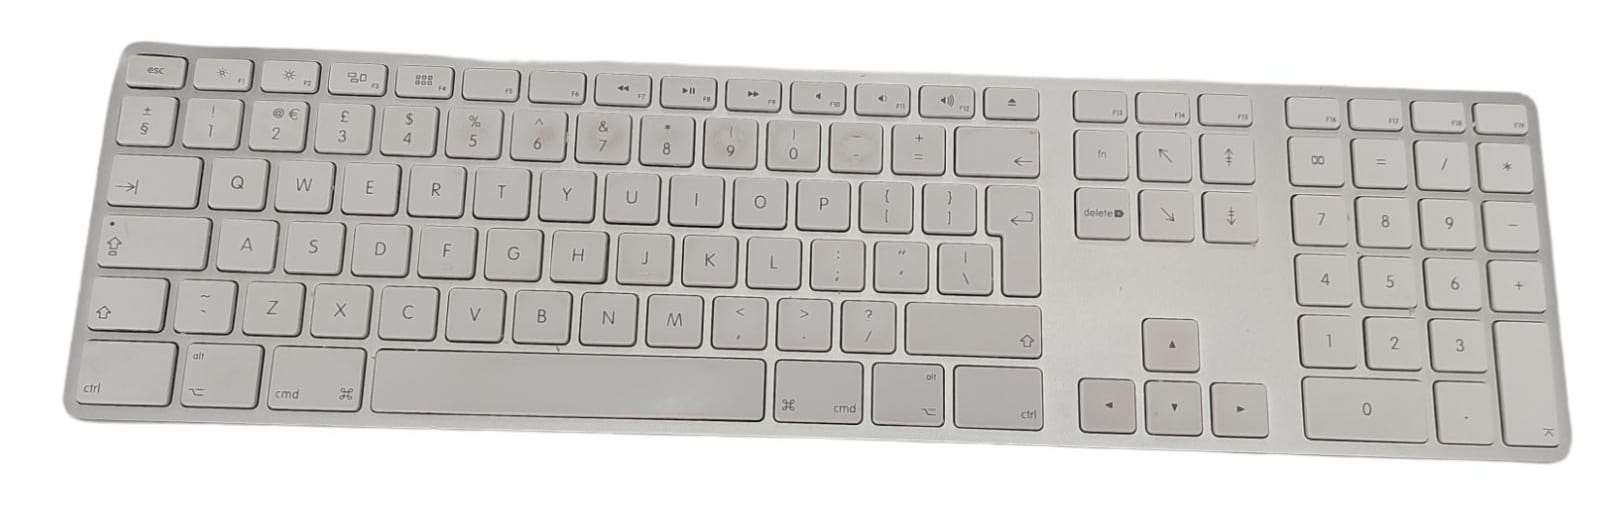 Apple Mac Keyboard - A1423 - unboxed